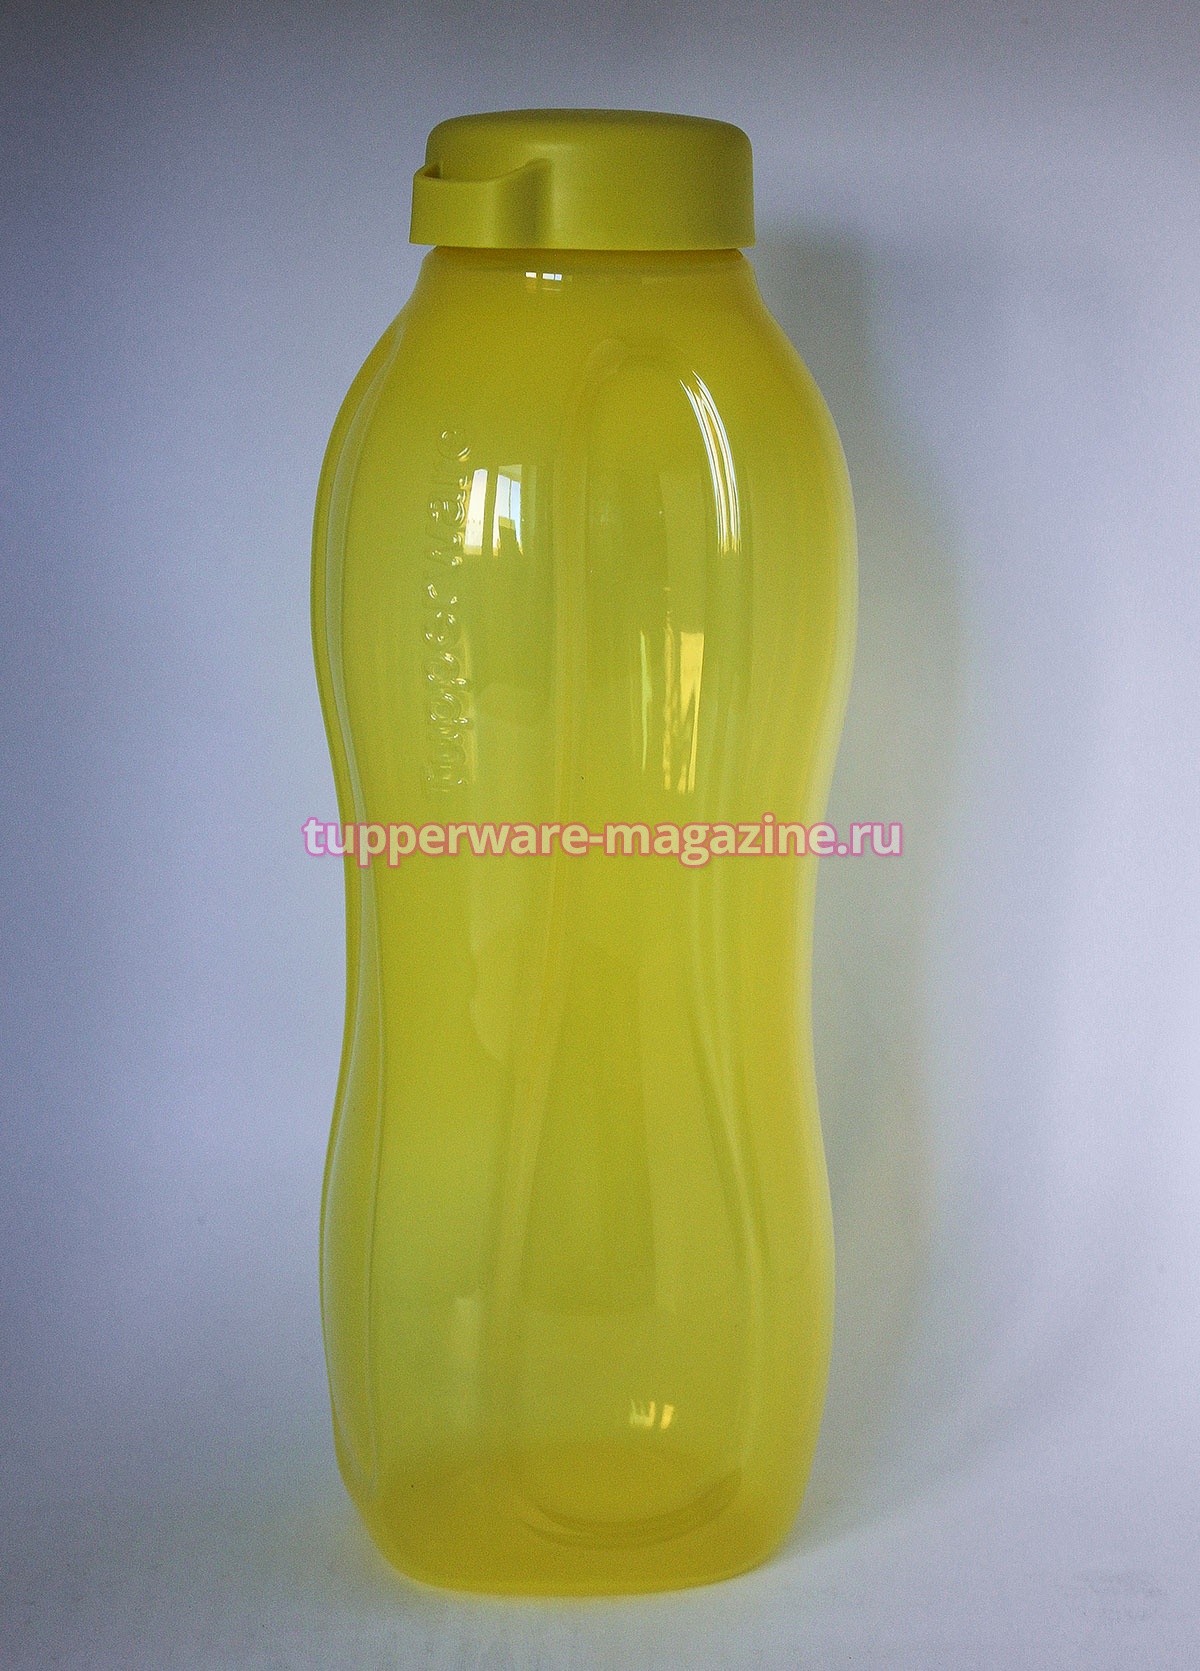 Эко-бутылка 1,5 л без клапана в желтом цвете с широким горлышком